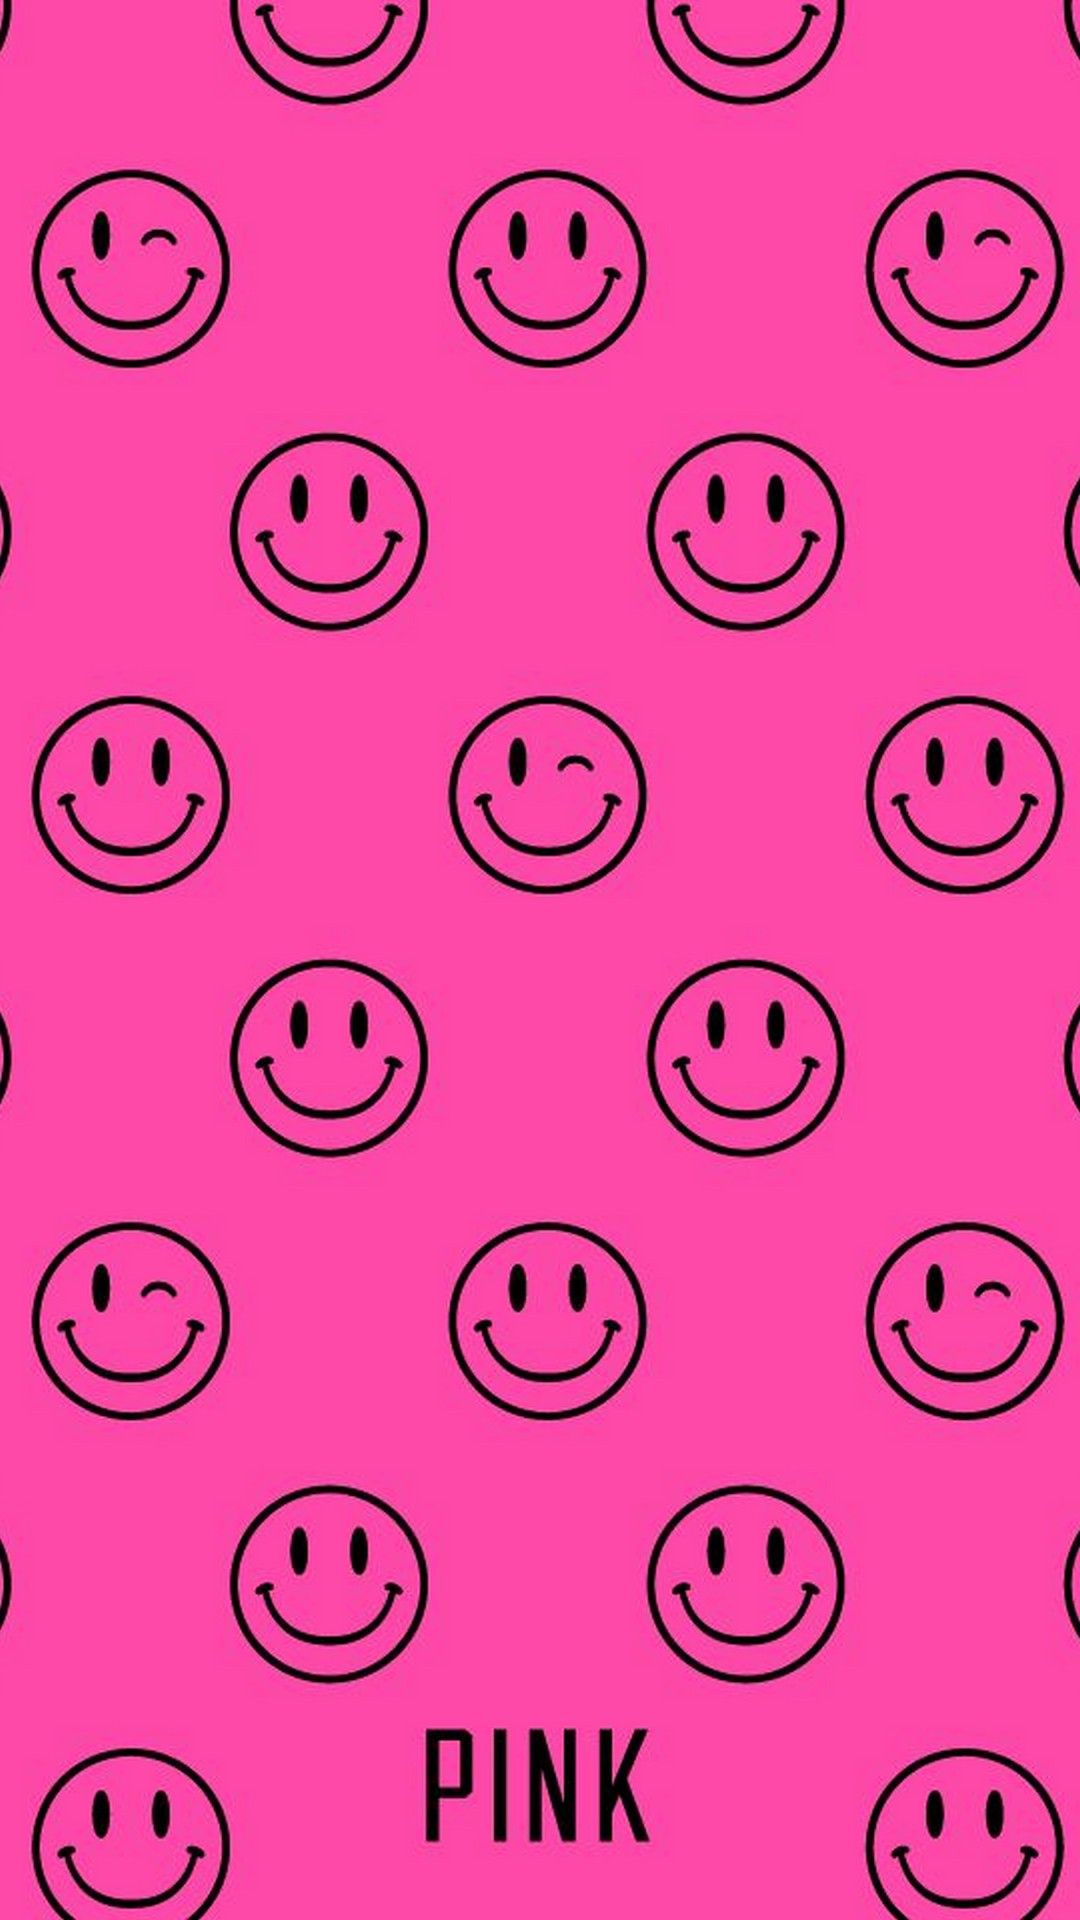 Pink Emoji Wallpaper iPhone iPhonewallpaper